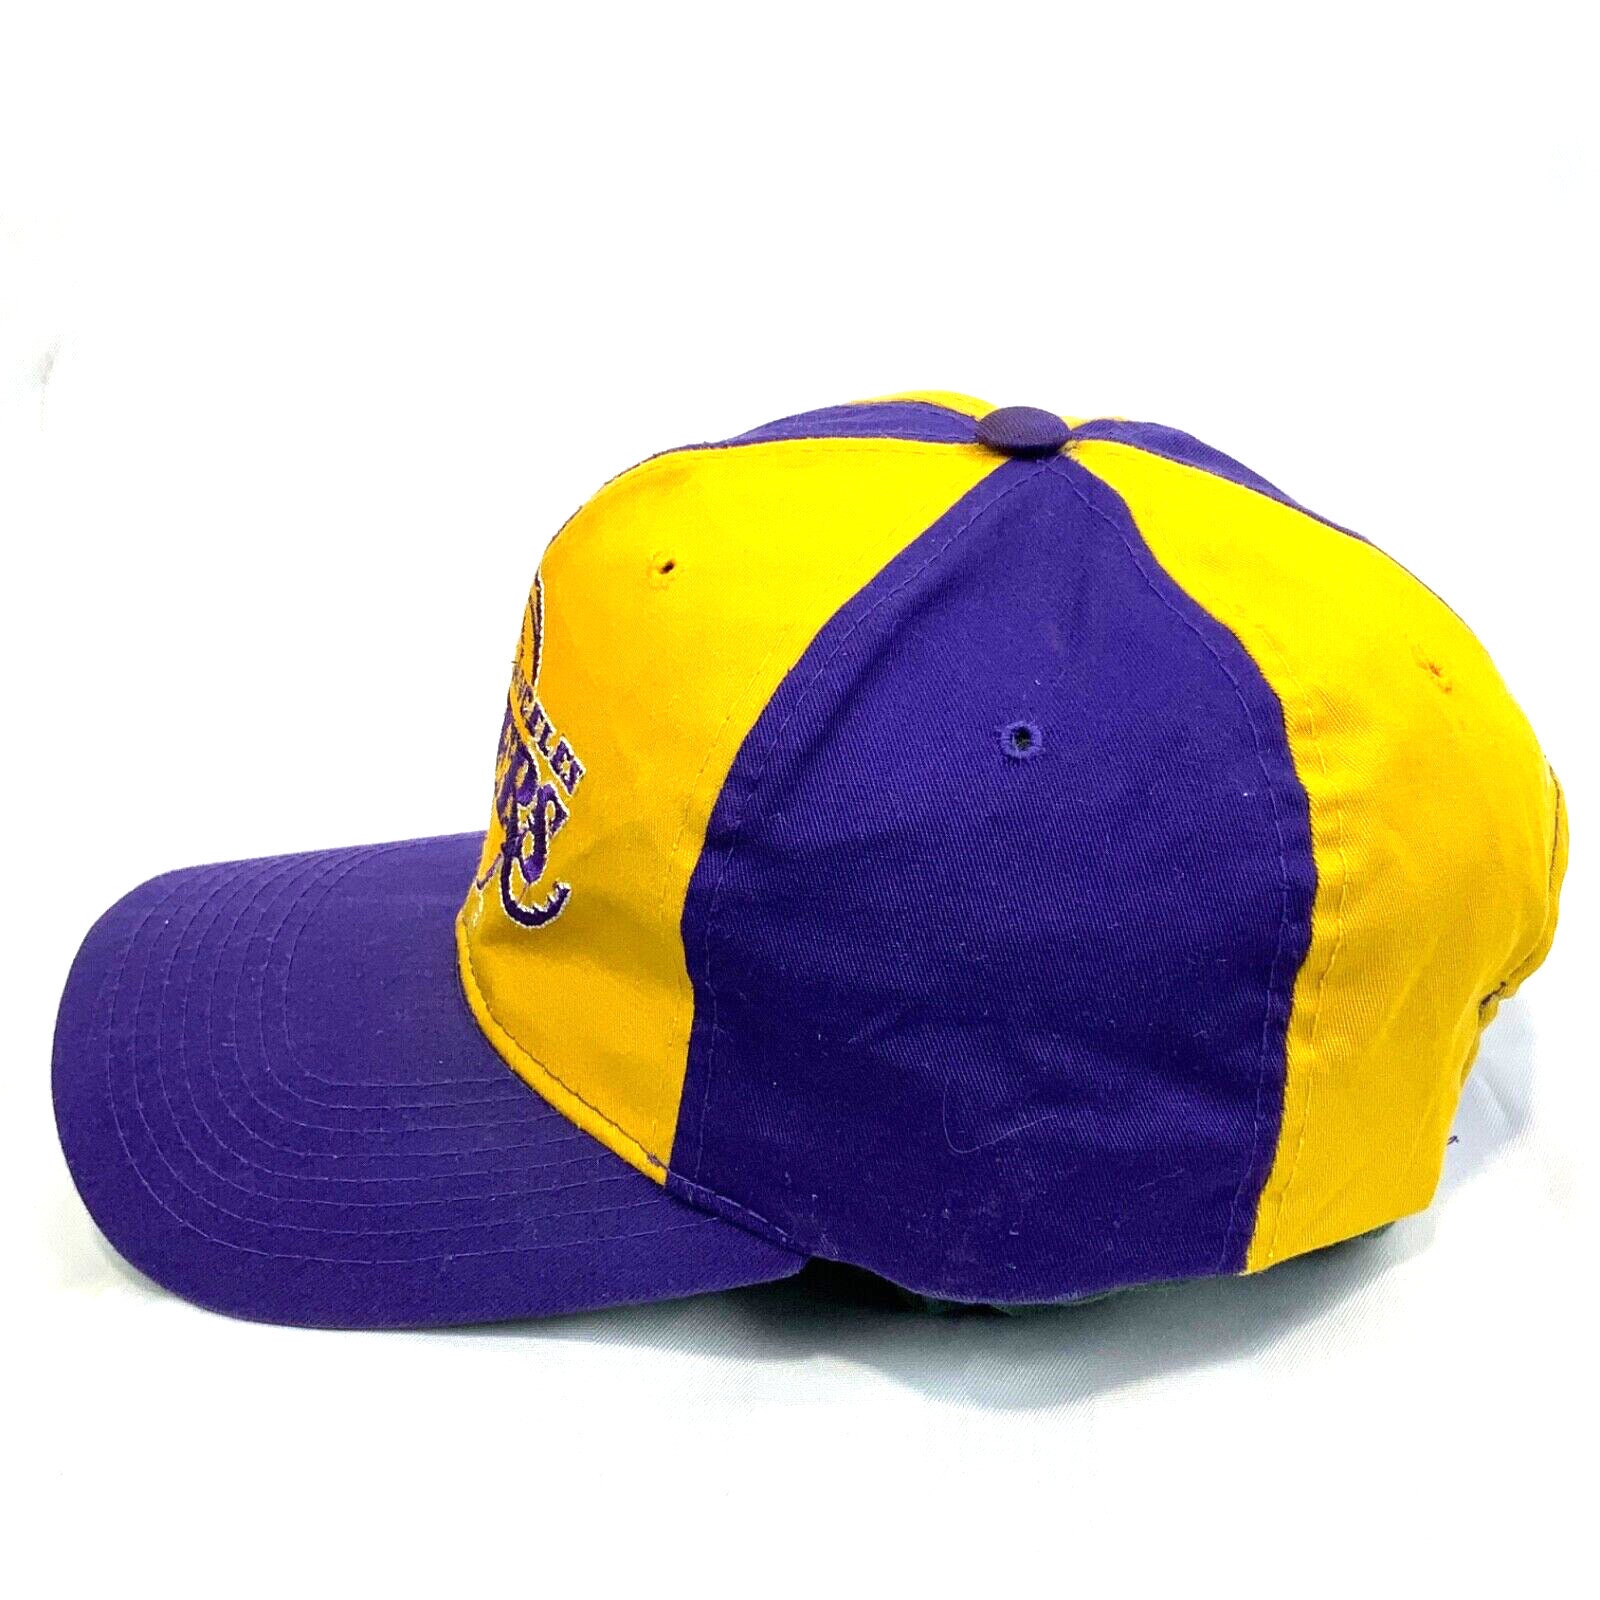 Vintage Customize NBA Los Angeles Lakers Dline Snapback Cap